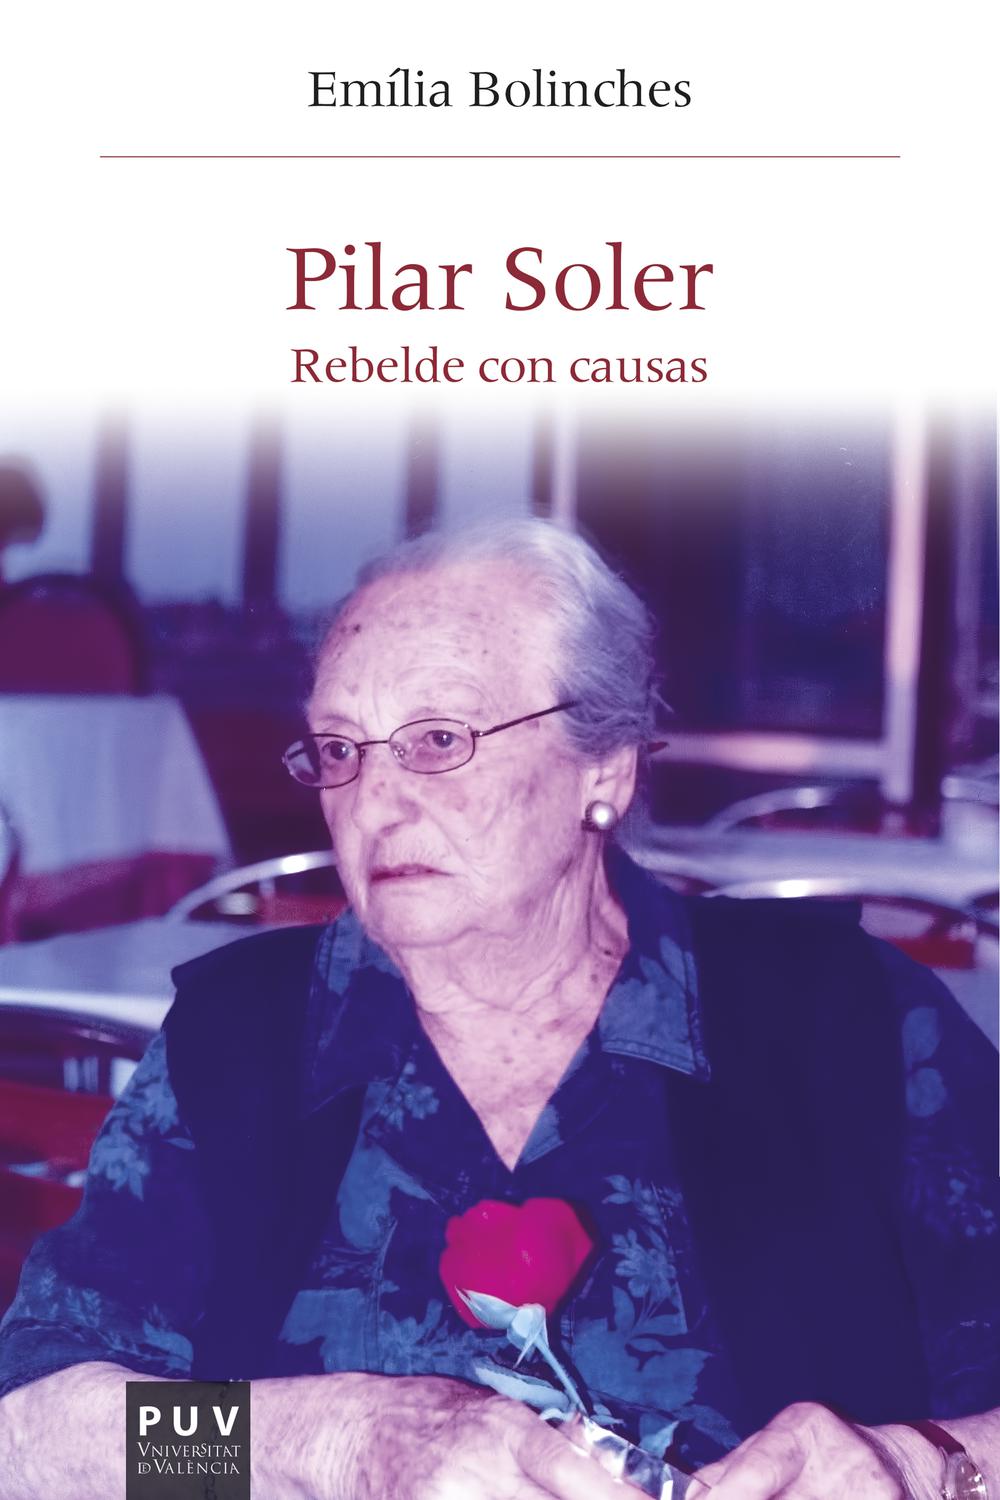 Pilar Soler - Emília Bolinches Ribera